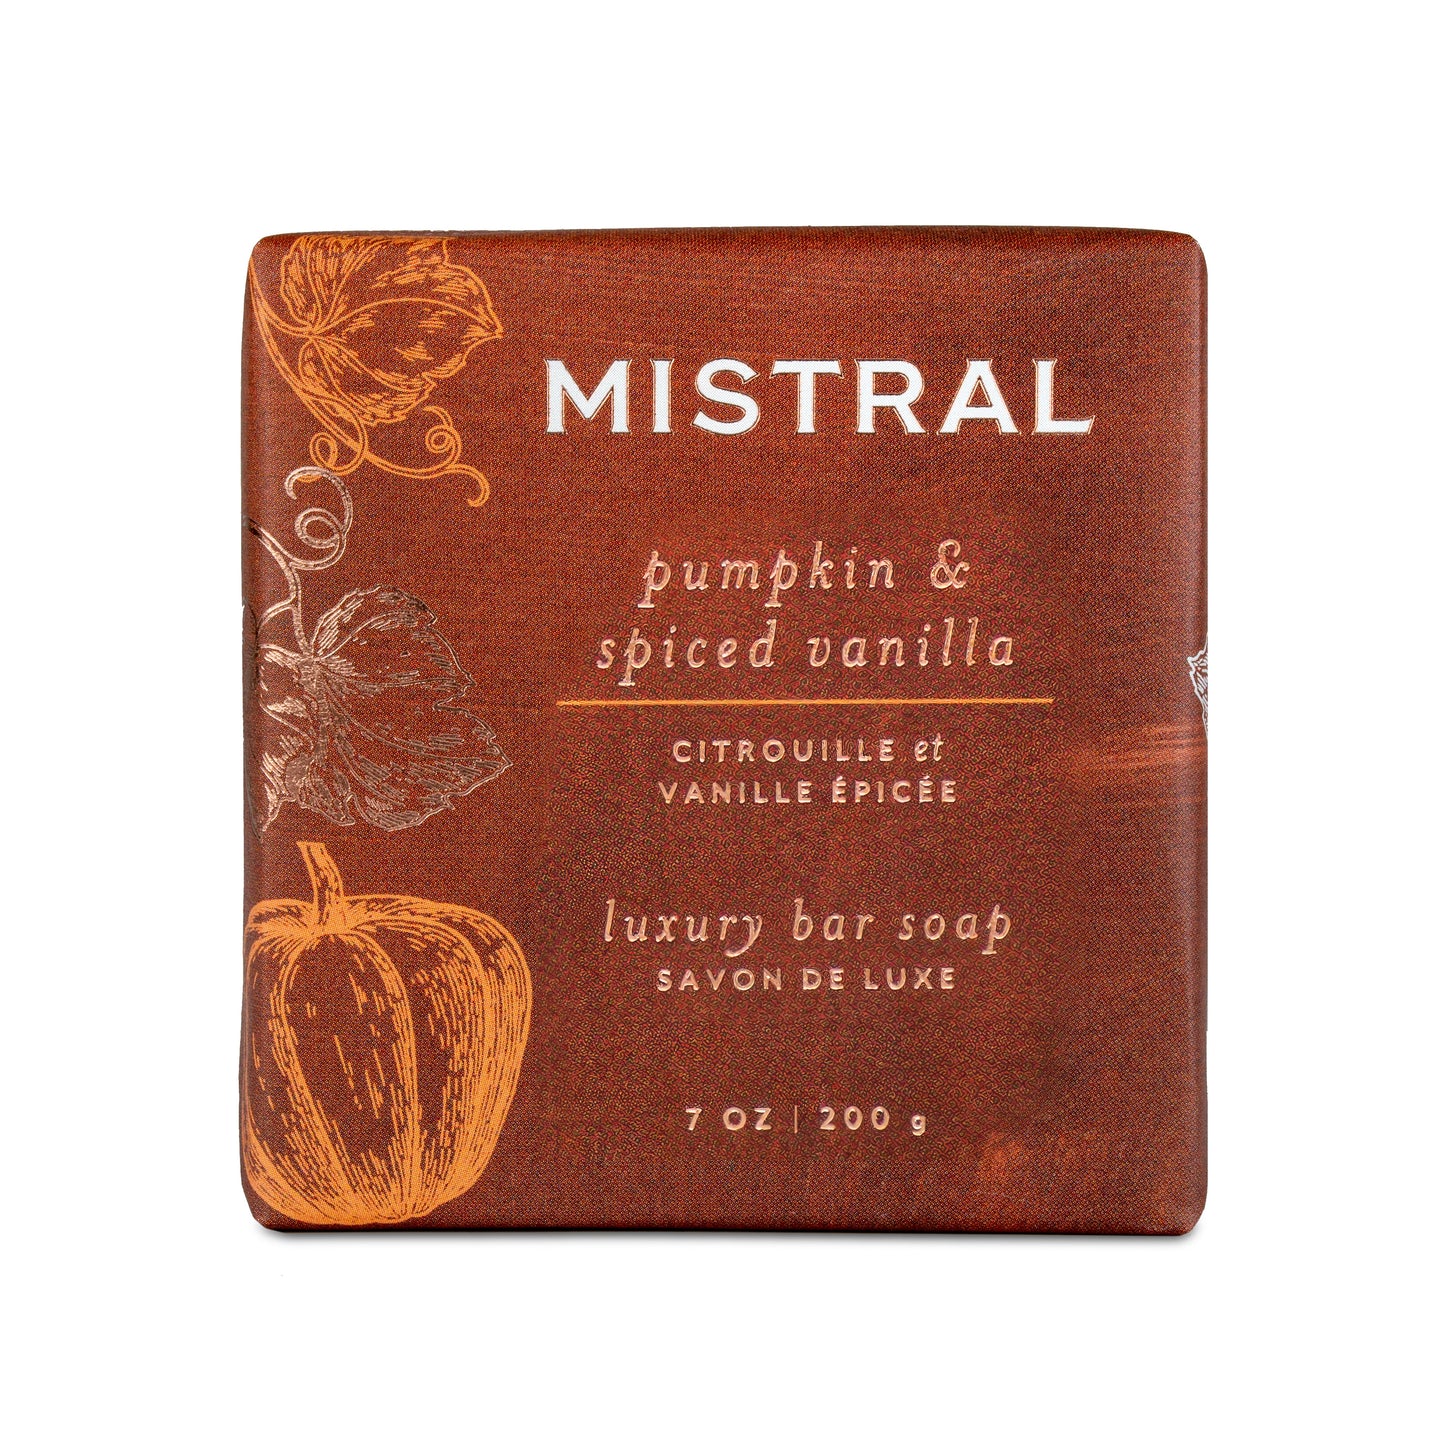 Mistral Pumpkin & Spiced Vanilla Collection